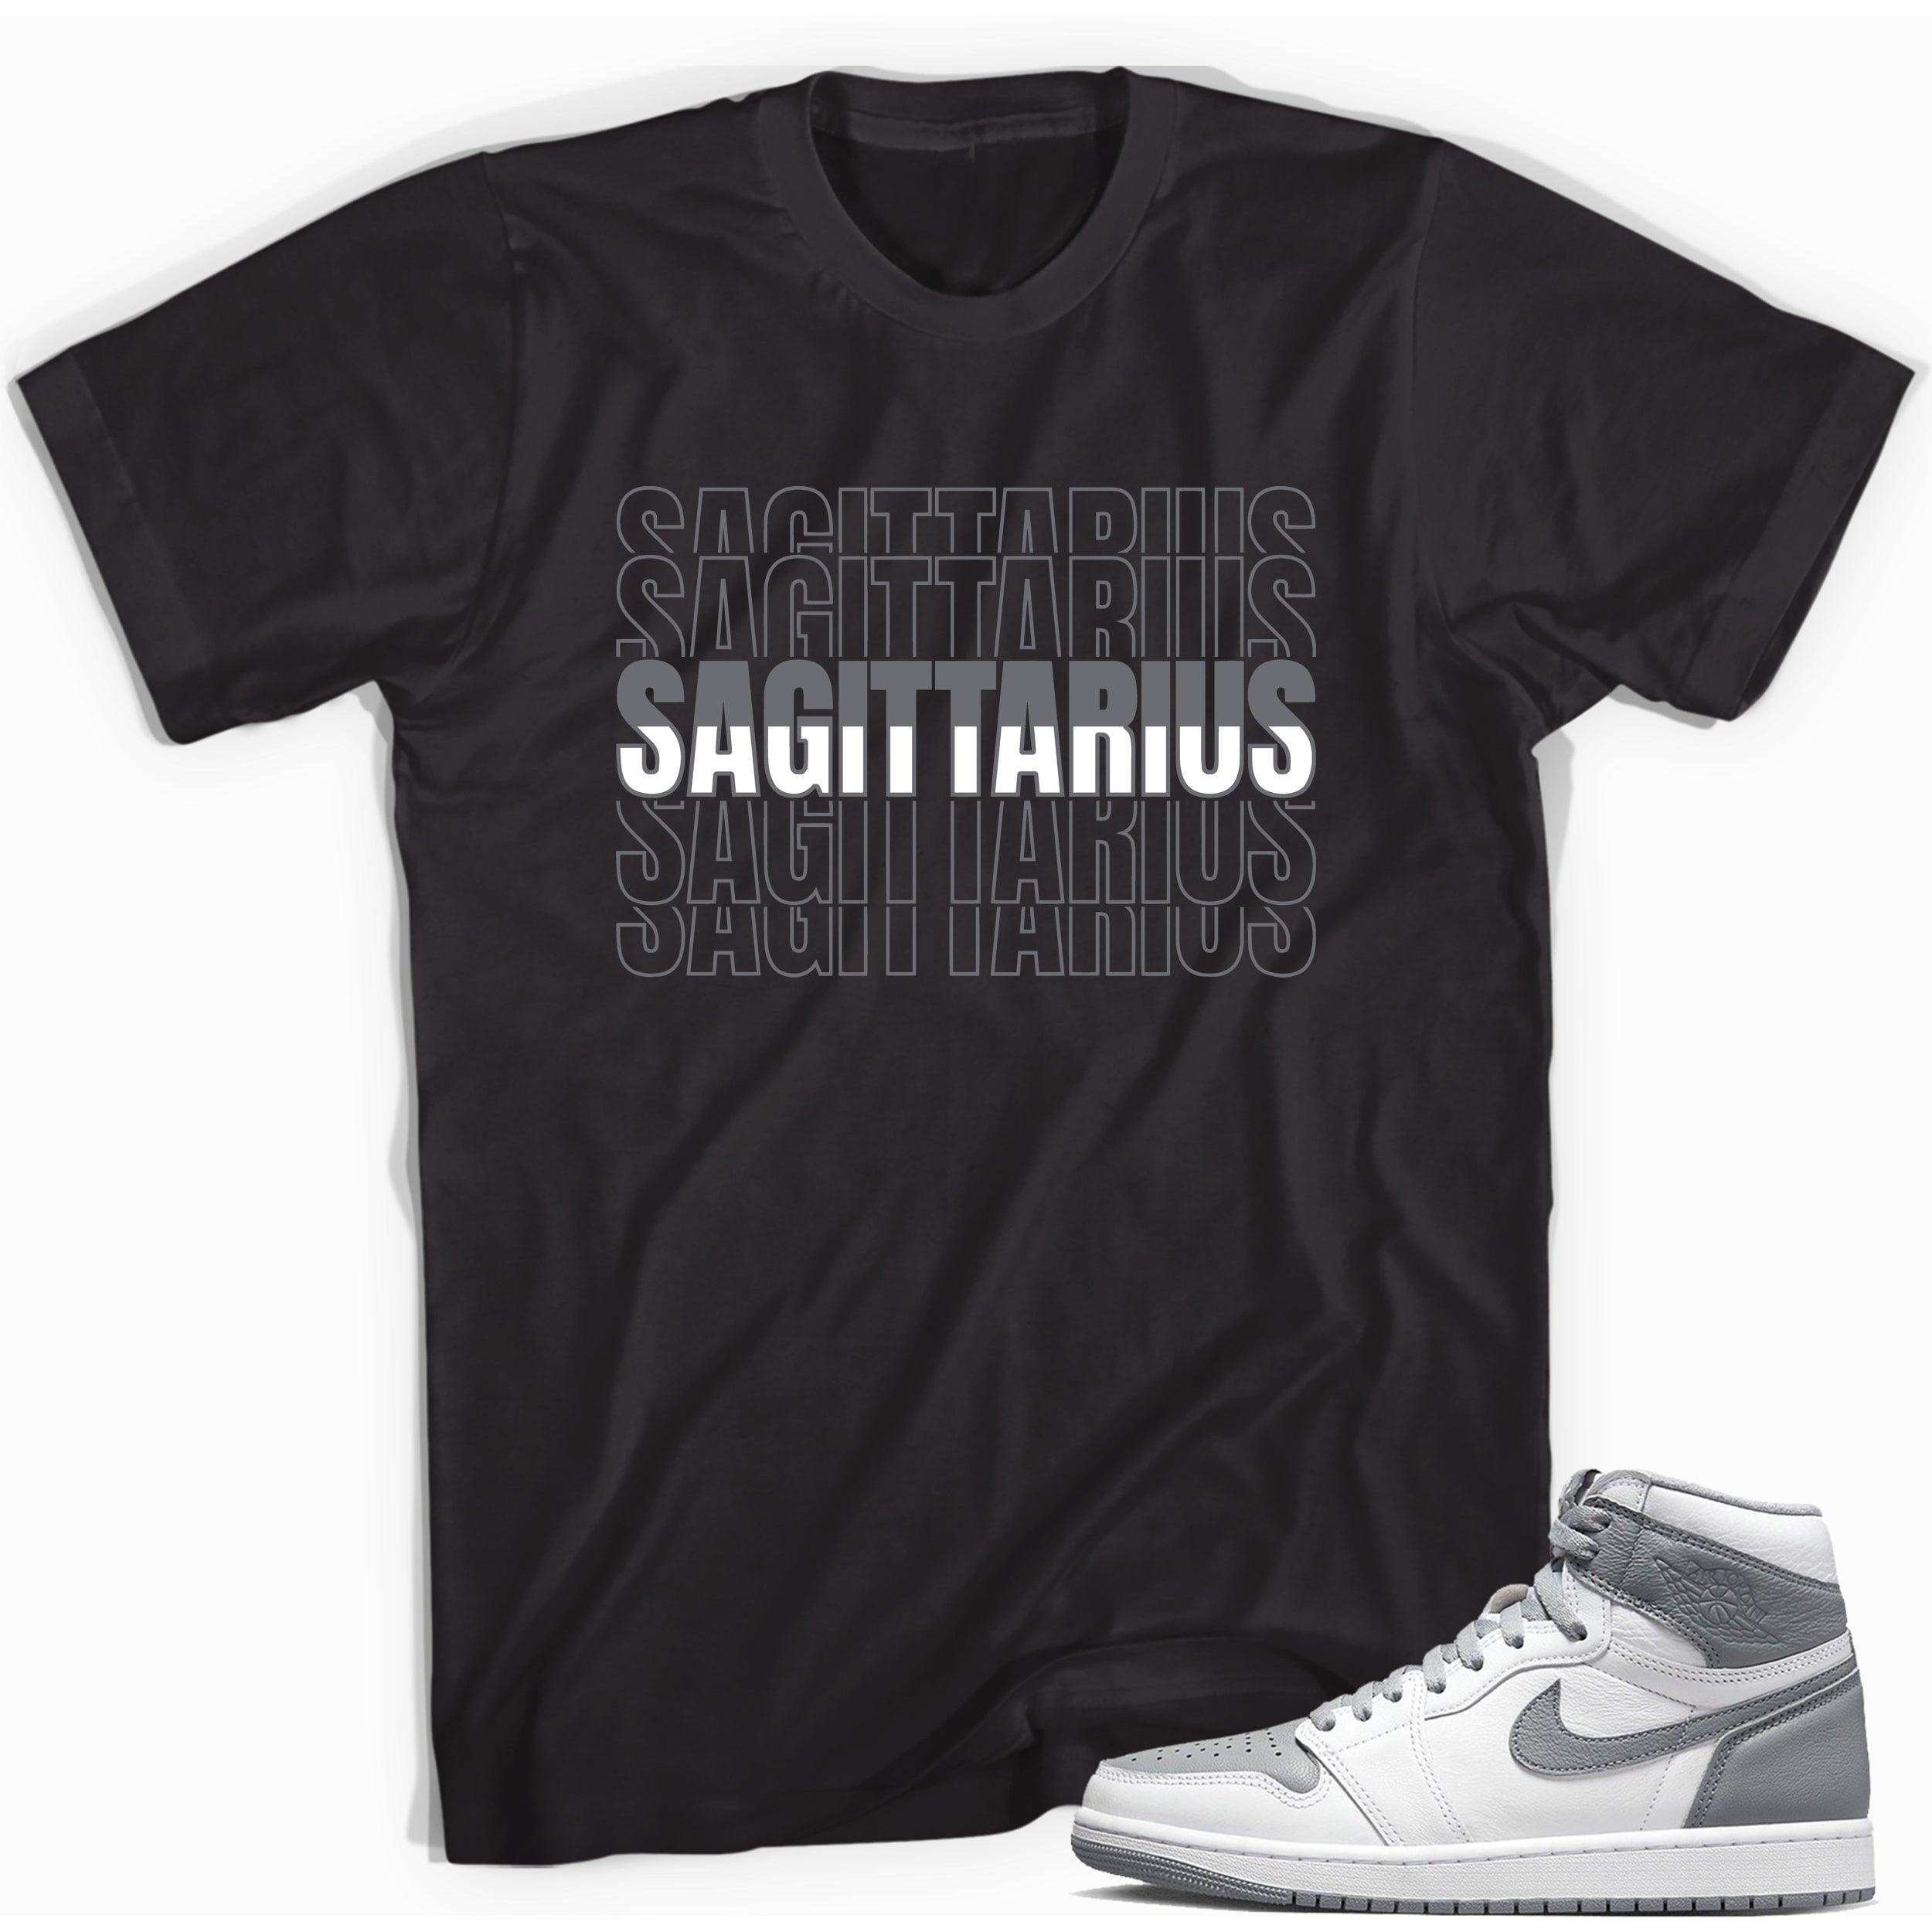 Sagittarius Shirt sneaker tee for Jordan 1s photo